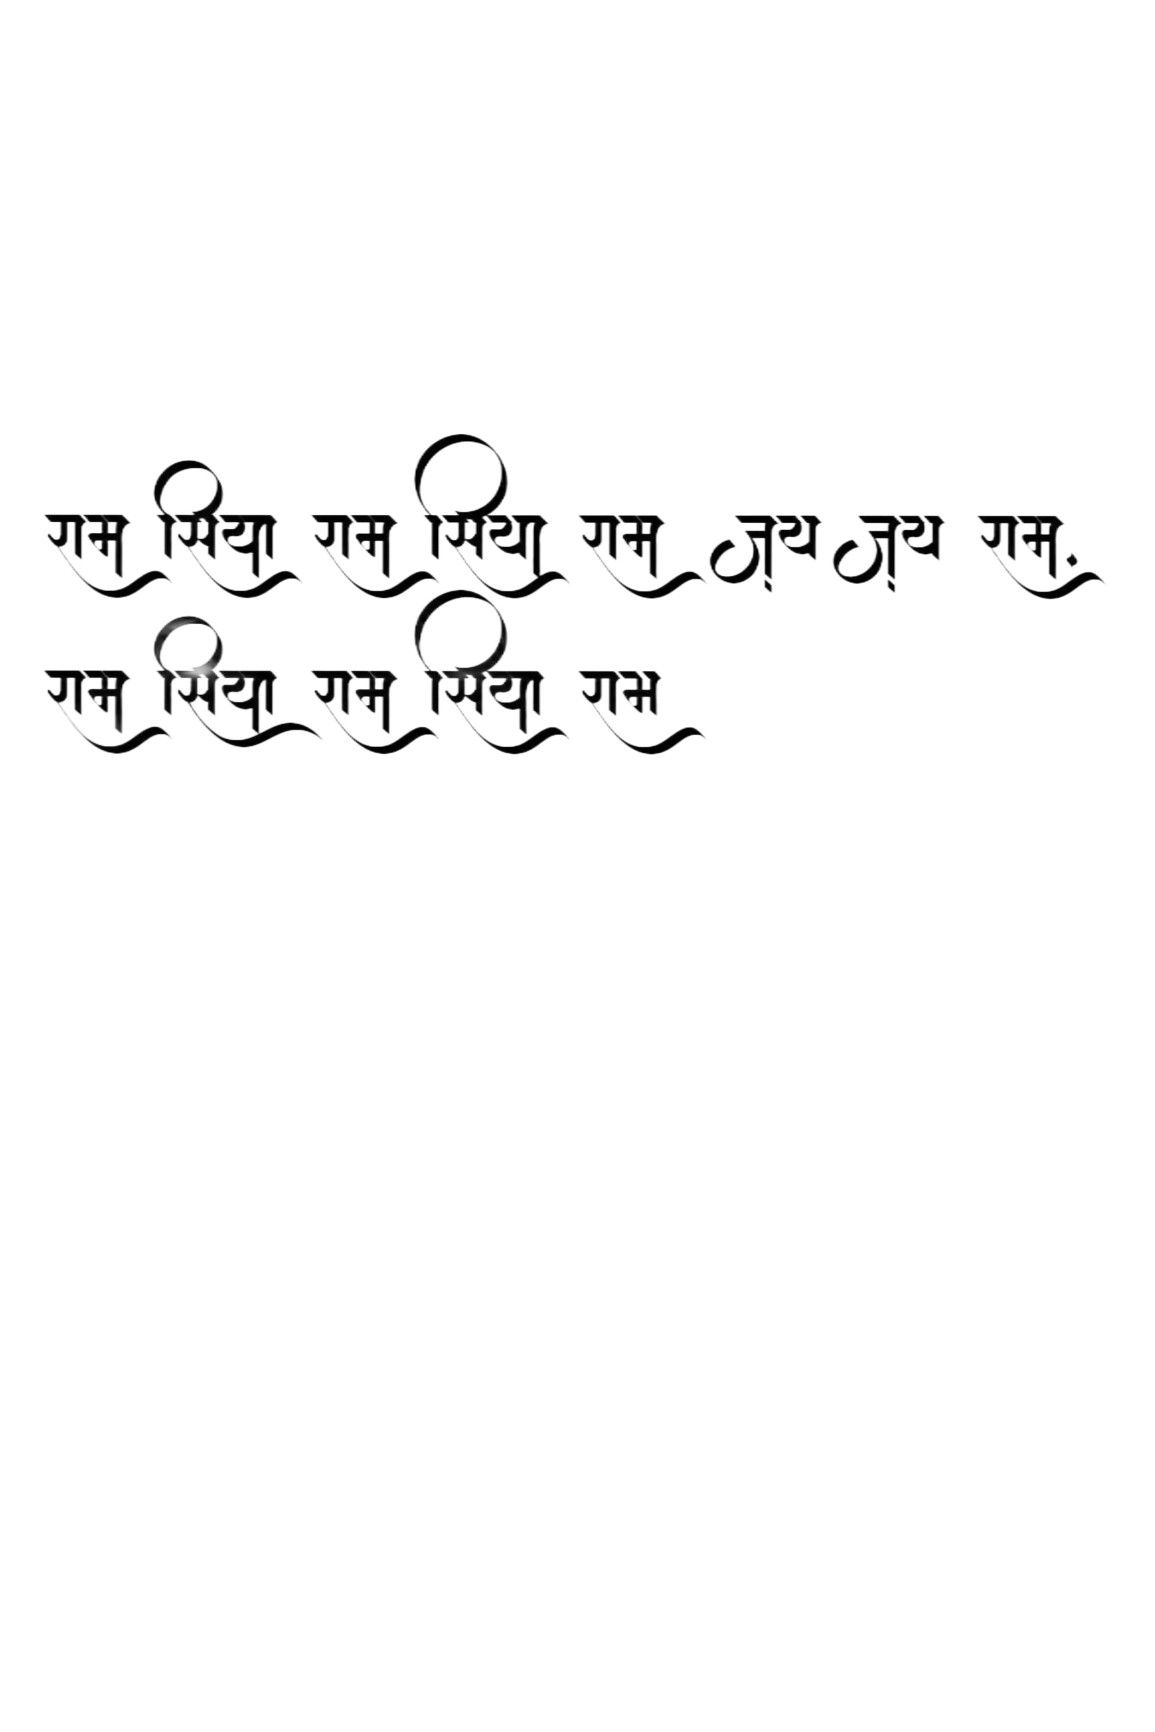 Typography | Ram Siya Ram Siya Ram Jay Jay Ram